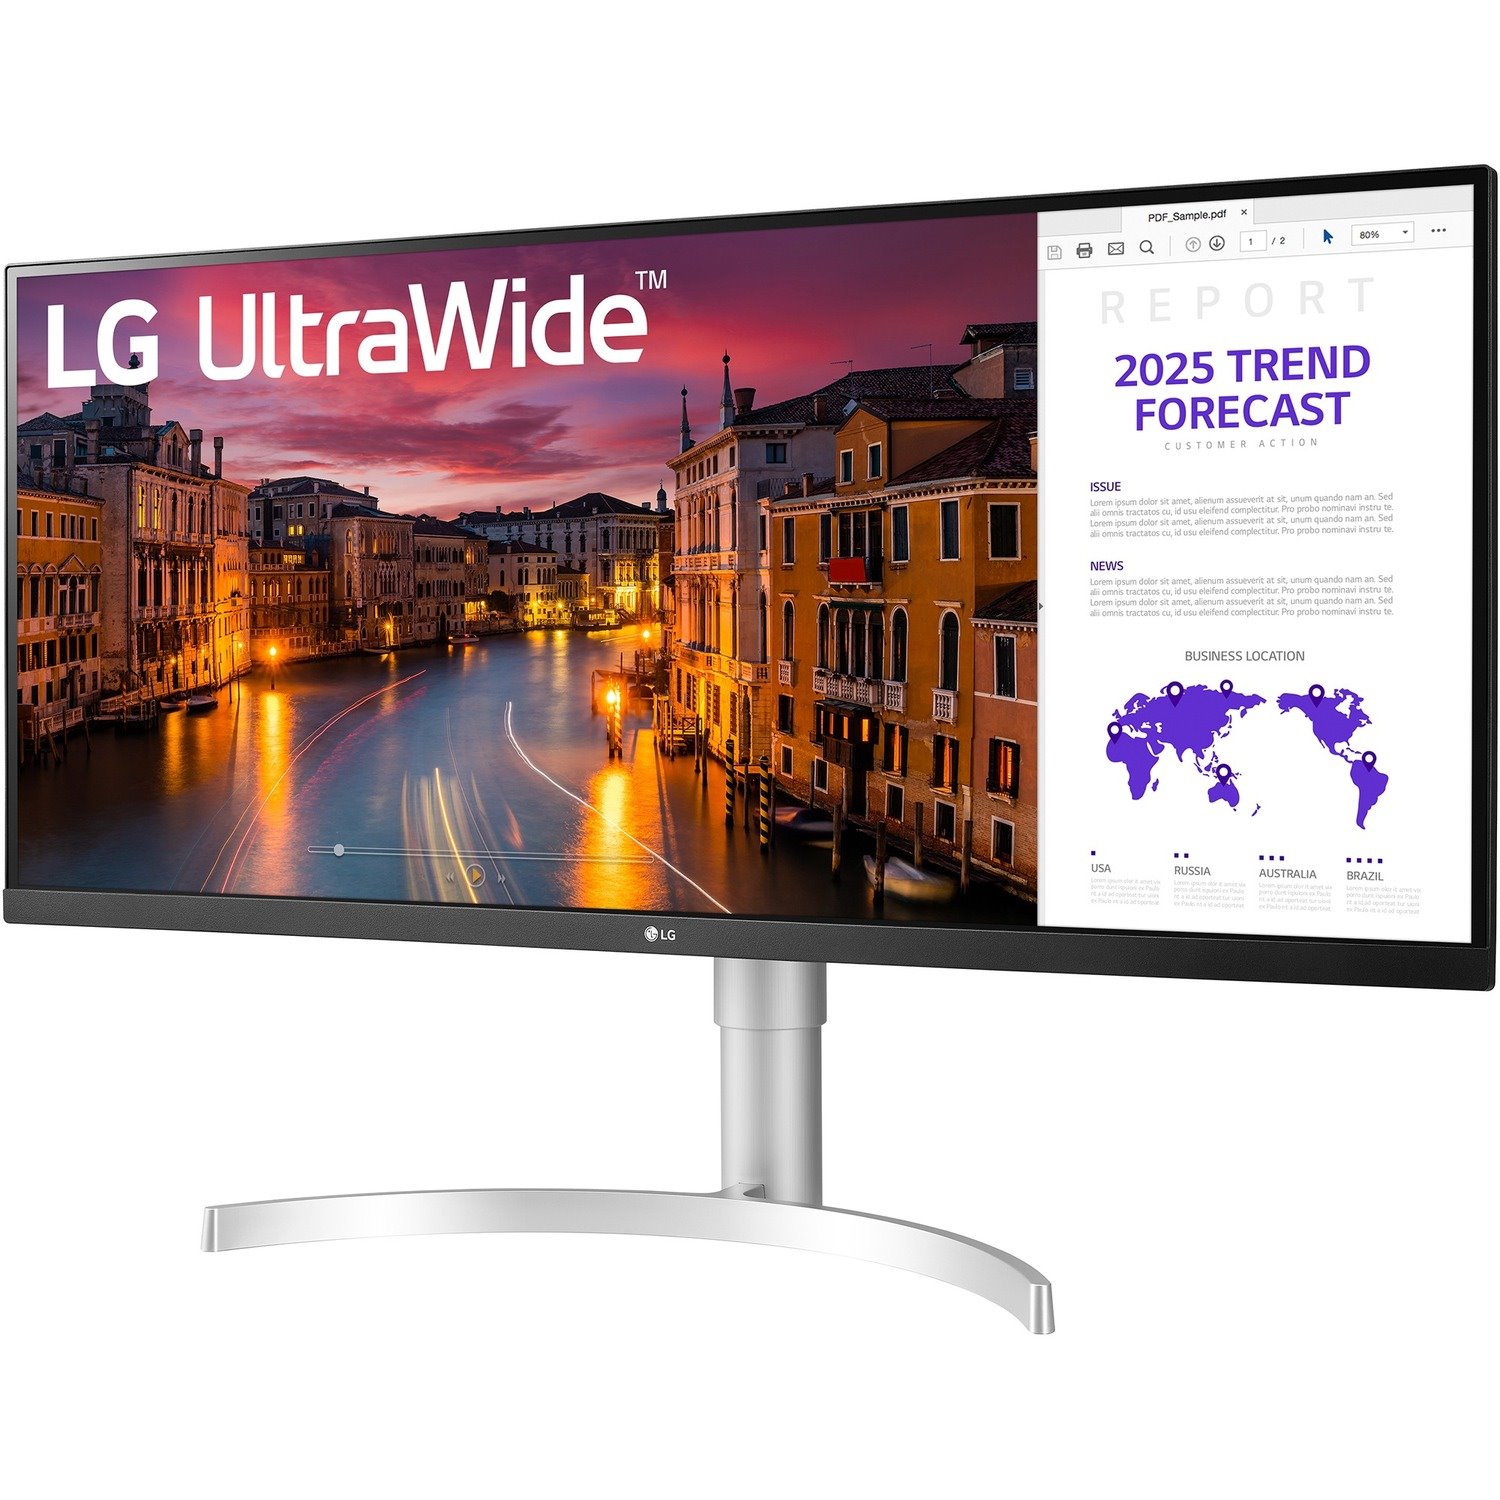 LG Ultrawide 34WN650-W 86.4 cm (34") UW-UXGA LED Gaming LCD Monitor - 21:9 - White, Black, Silver